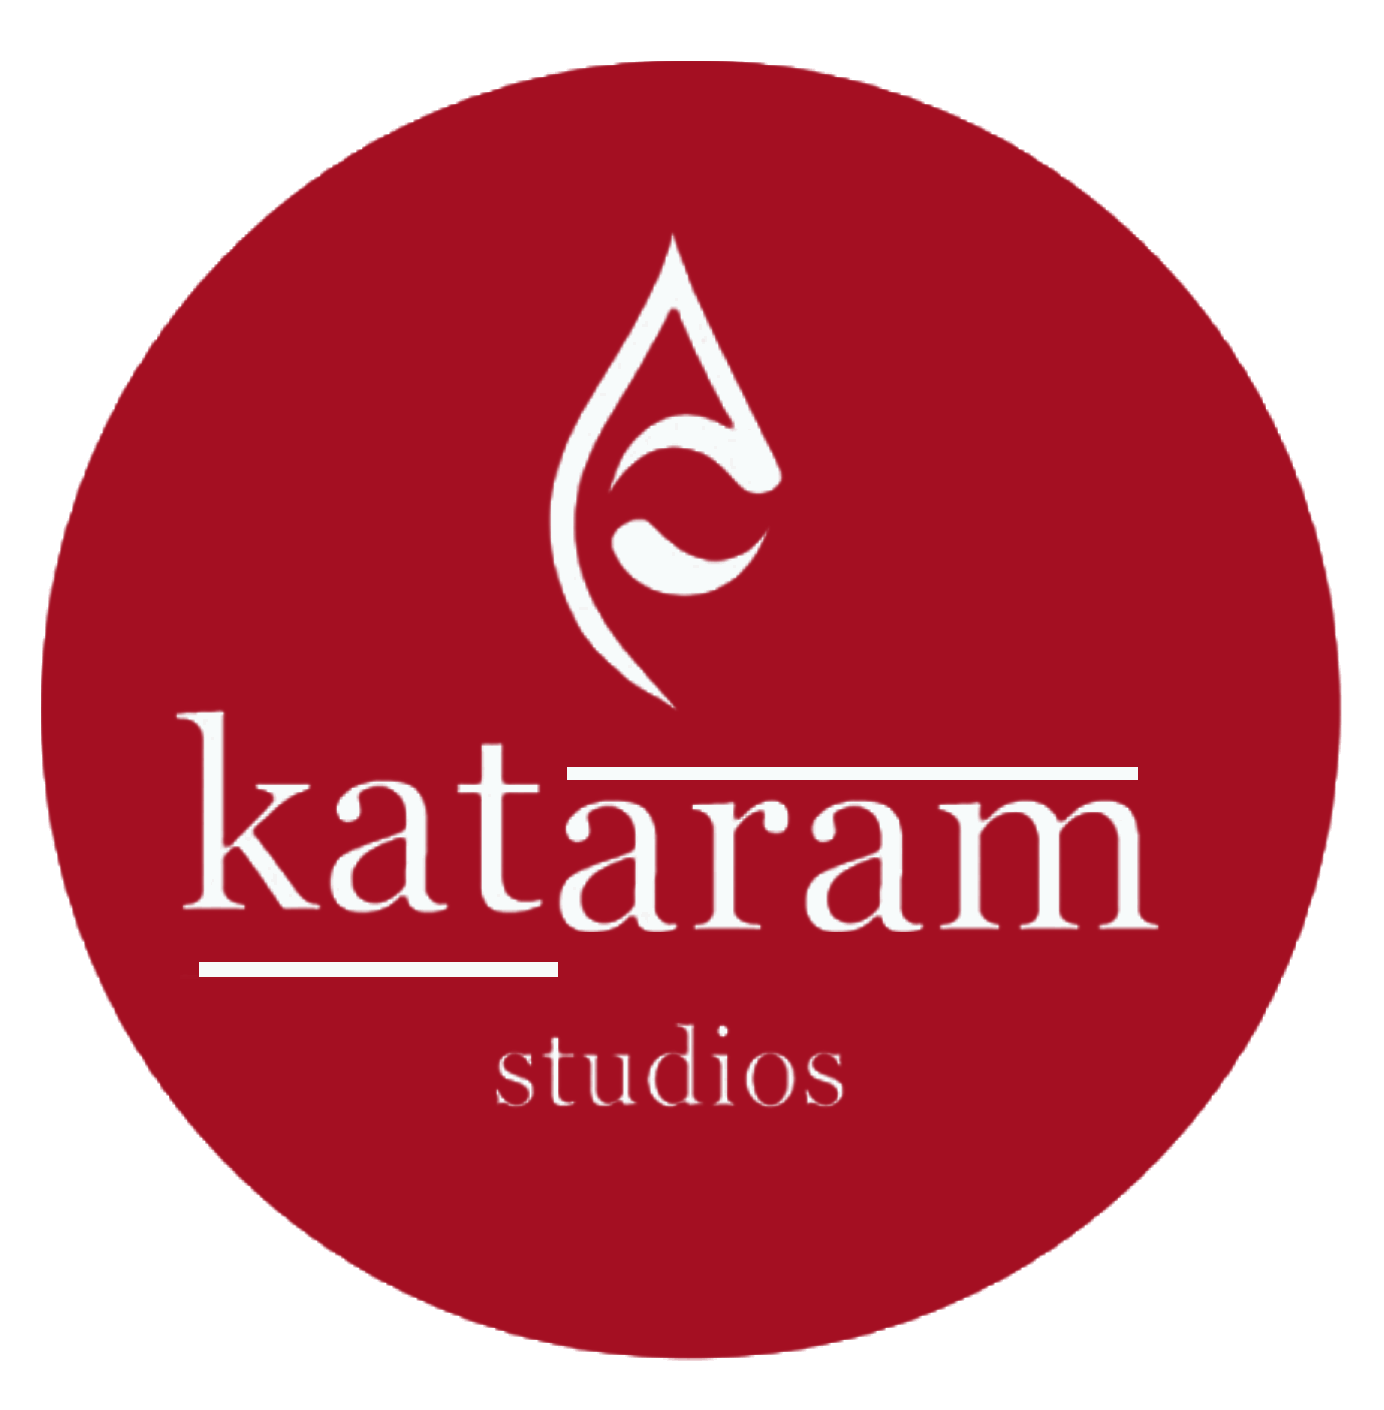 Kataram Studios